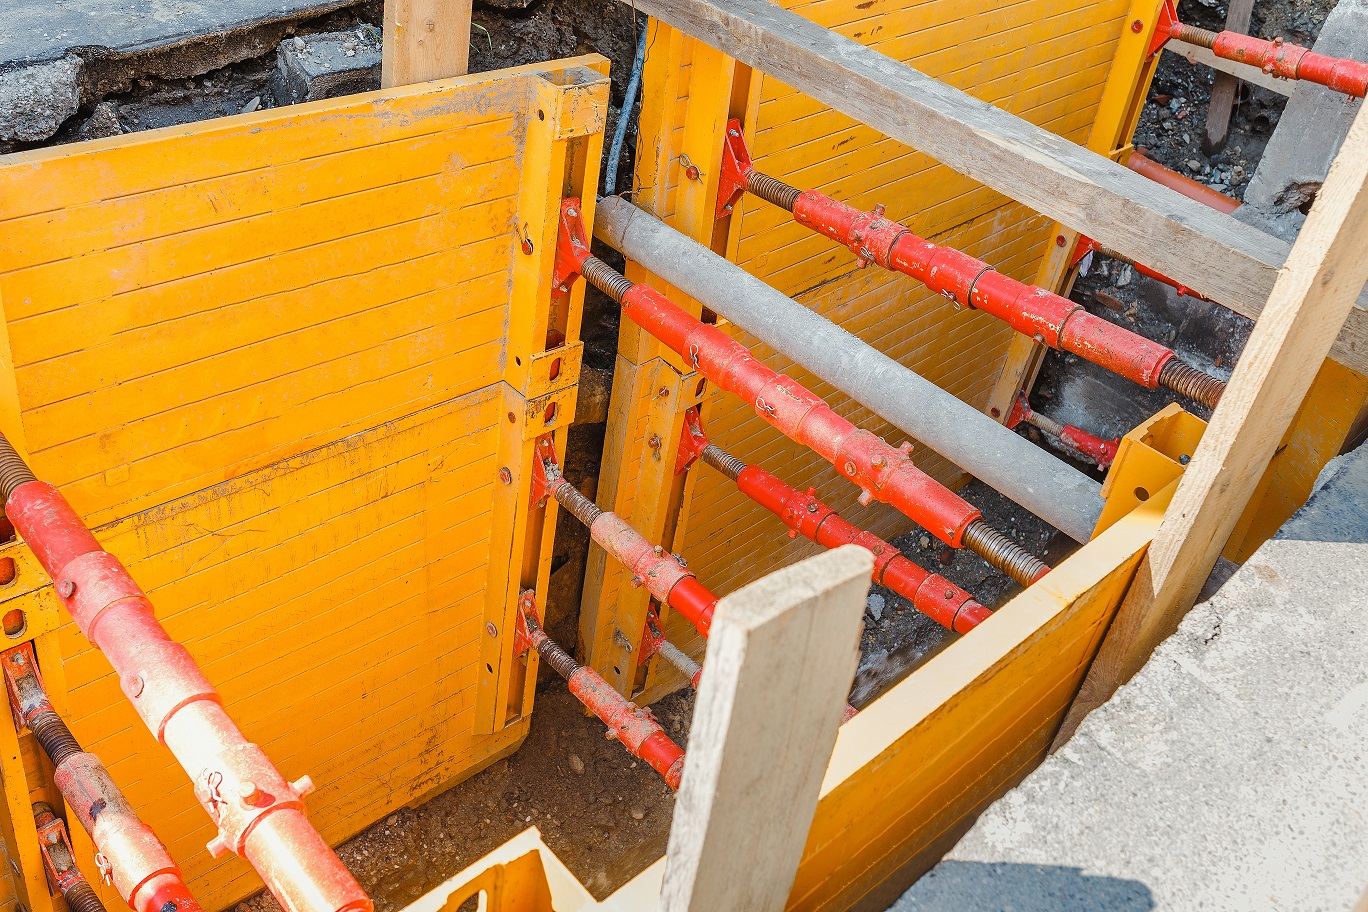 Trenching and Excavation Safety – OSHA Update